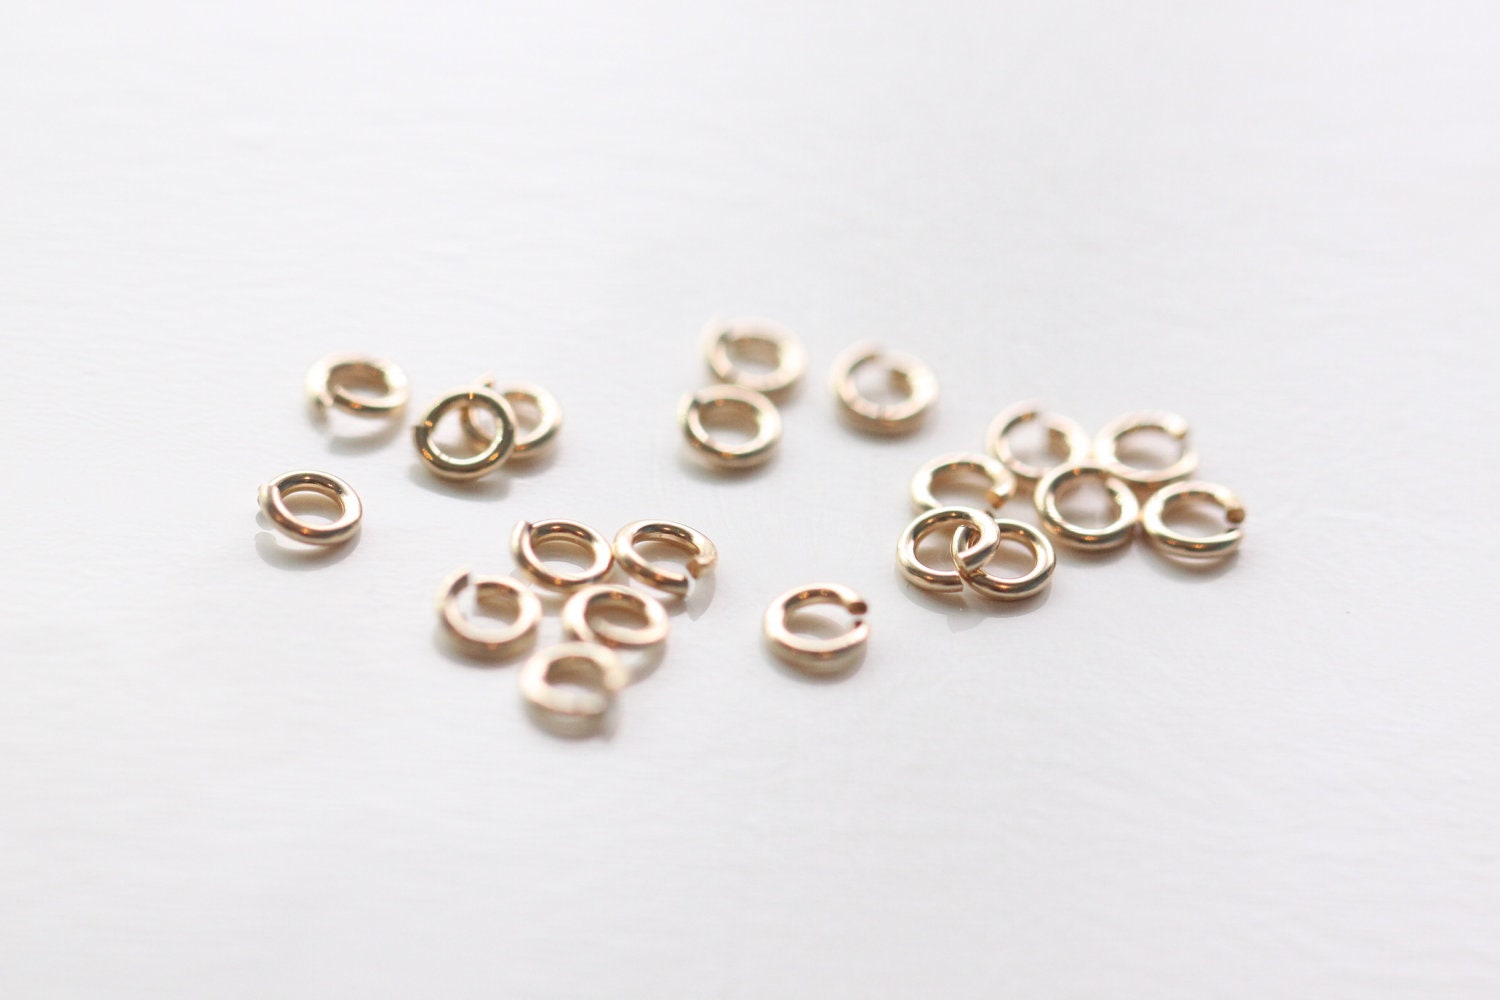 CHOOSE YOUR Color-split Rings 10mm Small Split Rings Open Jump